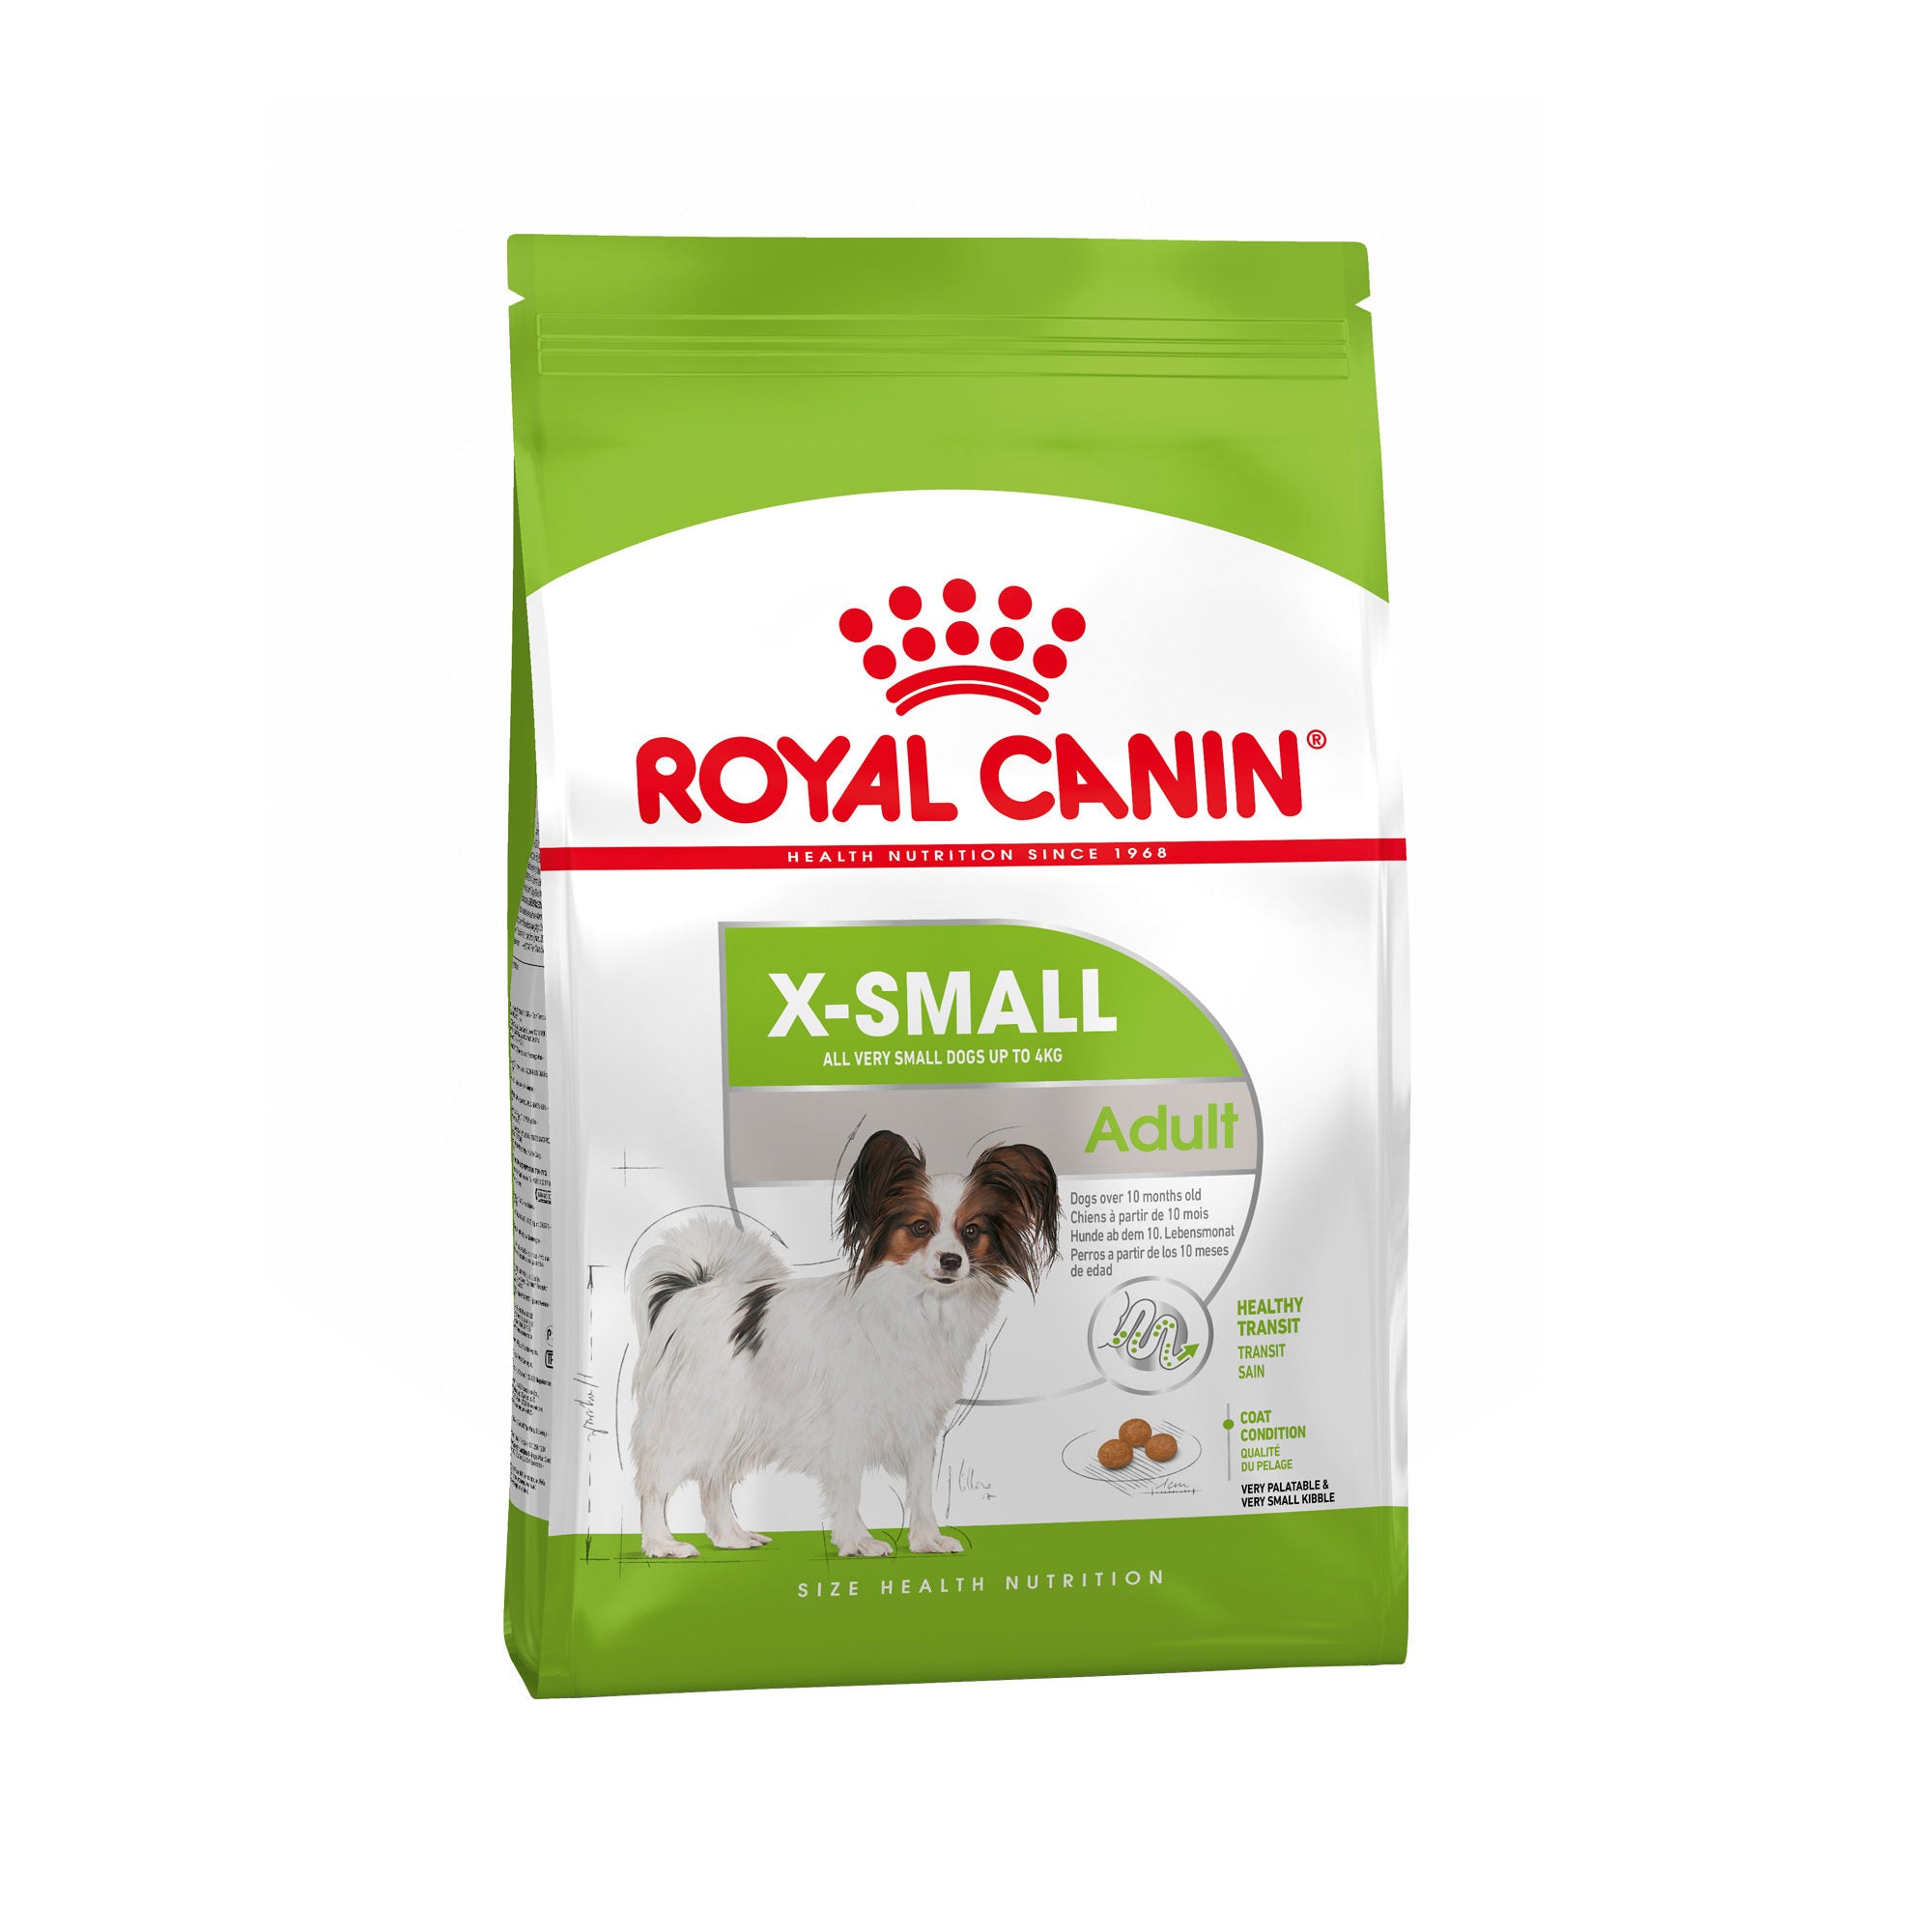 Royal Canin X-Small Adult Dry Dog Food 2.5LB